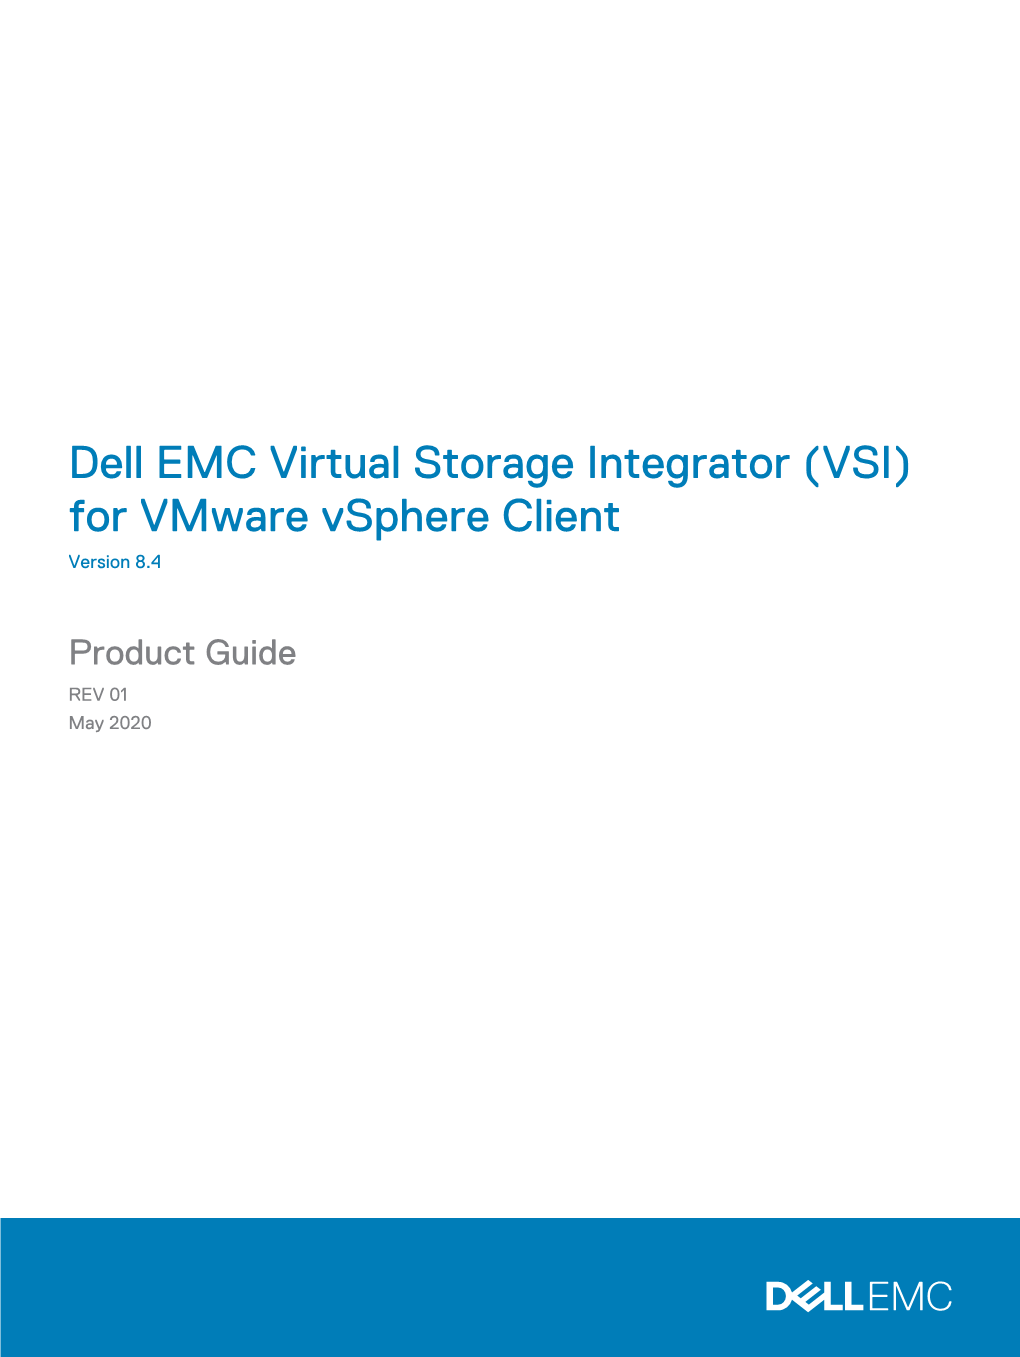 Dell EMC Virtual Storage Integrator (VSI) for Vmware Vsphere Client Version 8.4